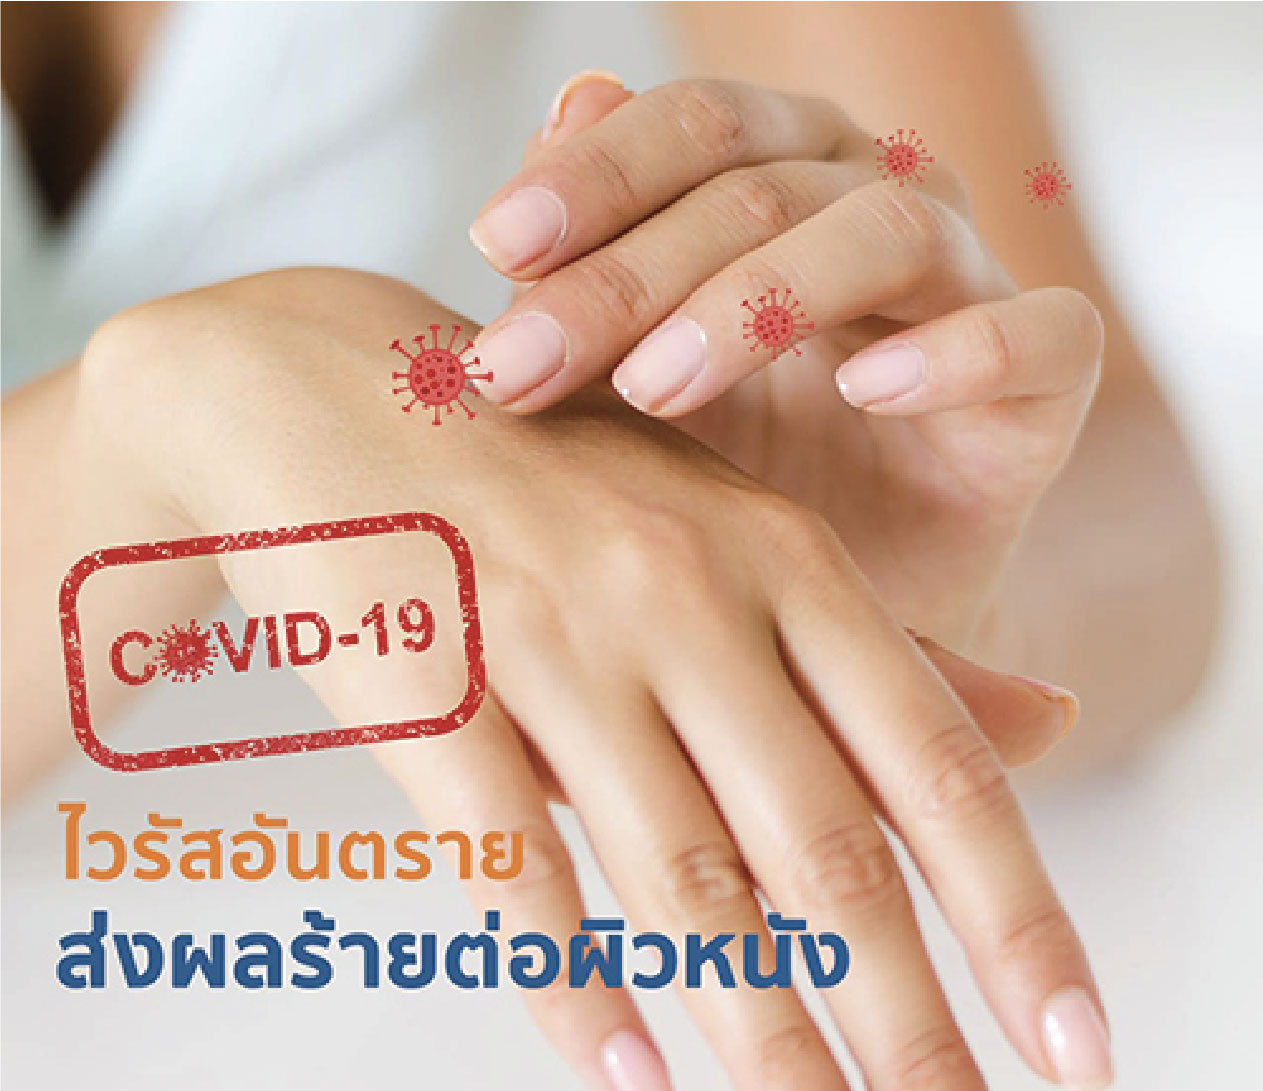 Covid-19 ไวรัสอันตรายส่งผลร้ายต่อผิวหนัง